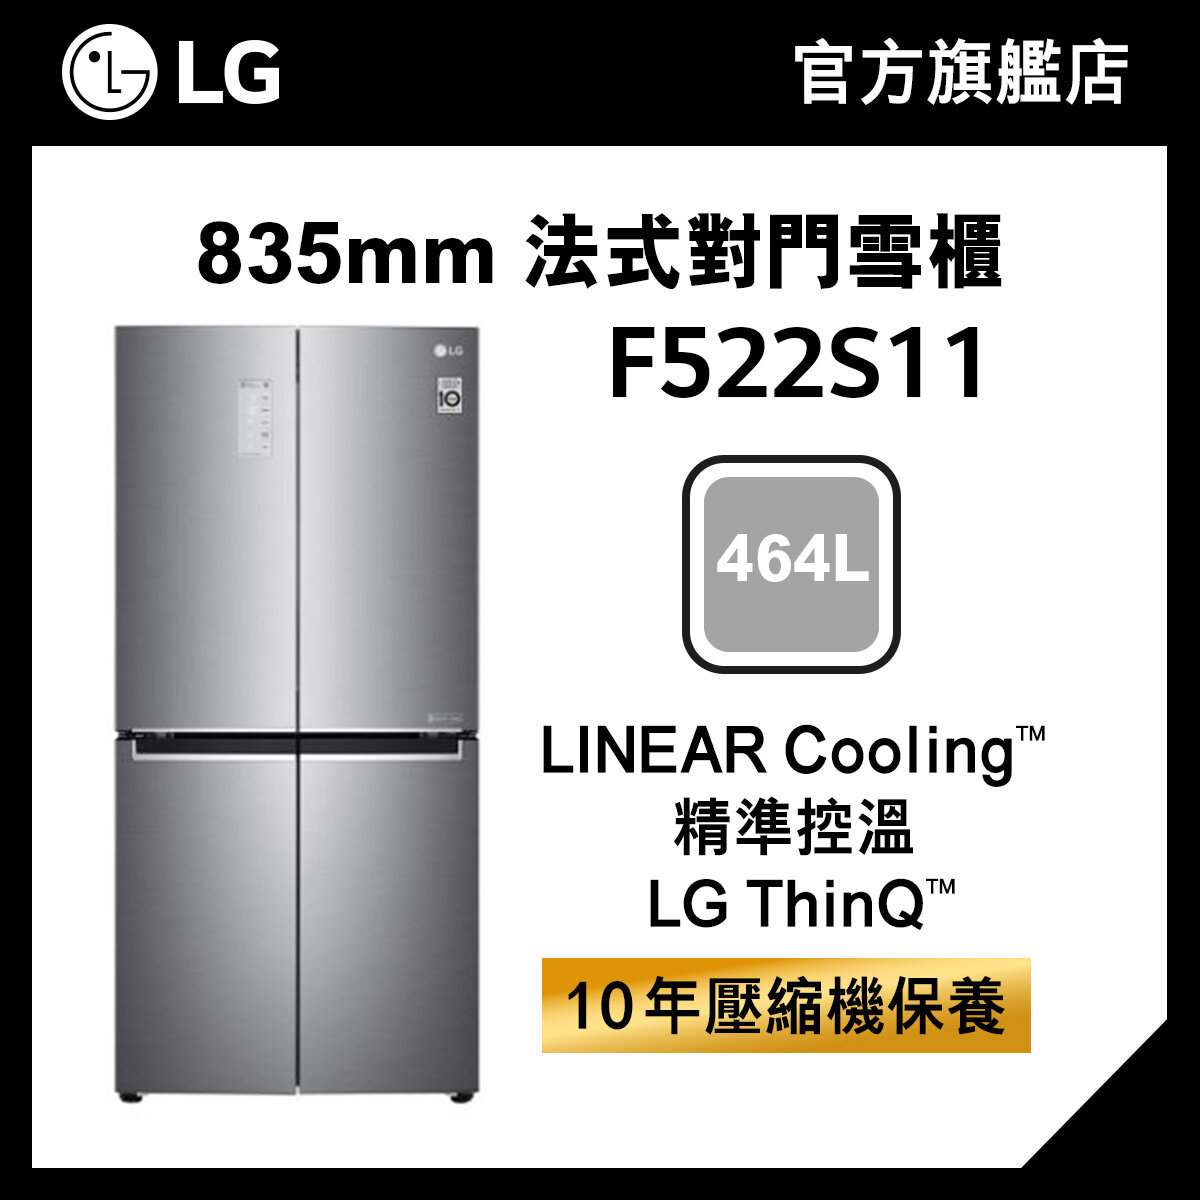 LG 464L 纖薄法式對門雪櫃 (變頻線性壓縮機 ,機身僅 835mm) F522S11